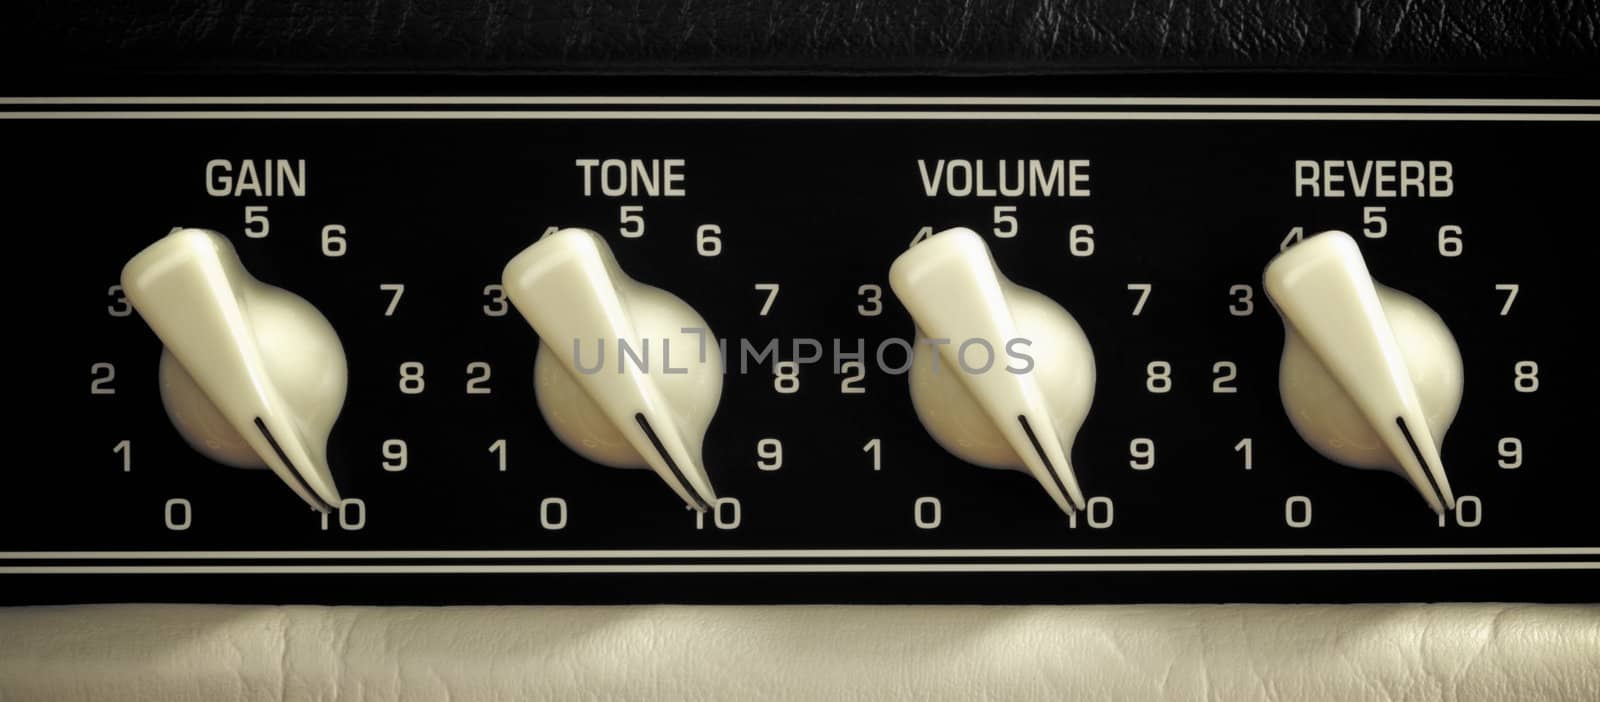 retro guitar amplifier control panel, maximum position, close up